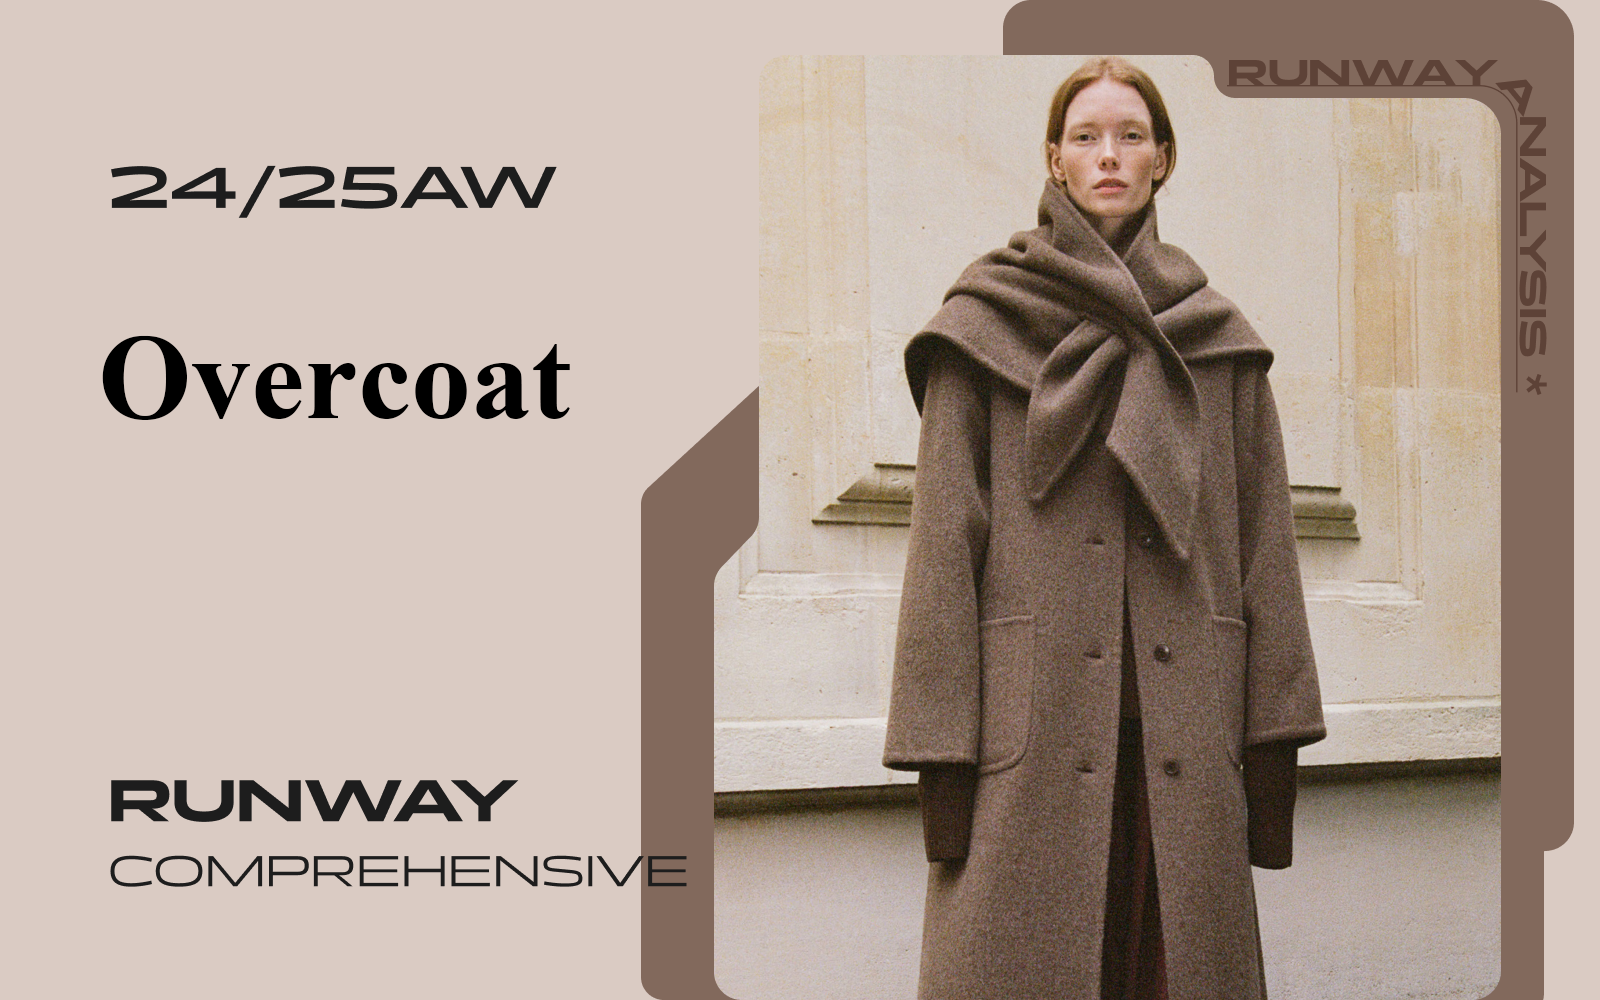 Overcoat -- The Comprehensive Analysis of A/W 24/25 Women's Runway